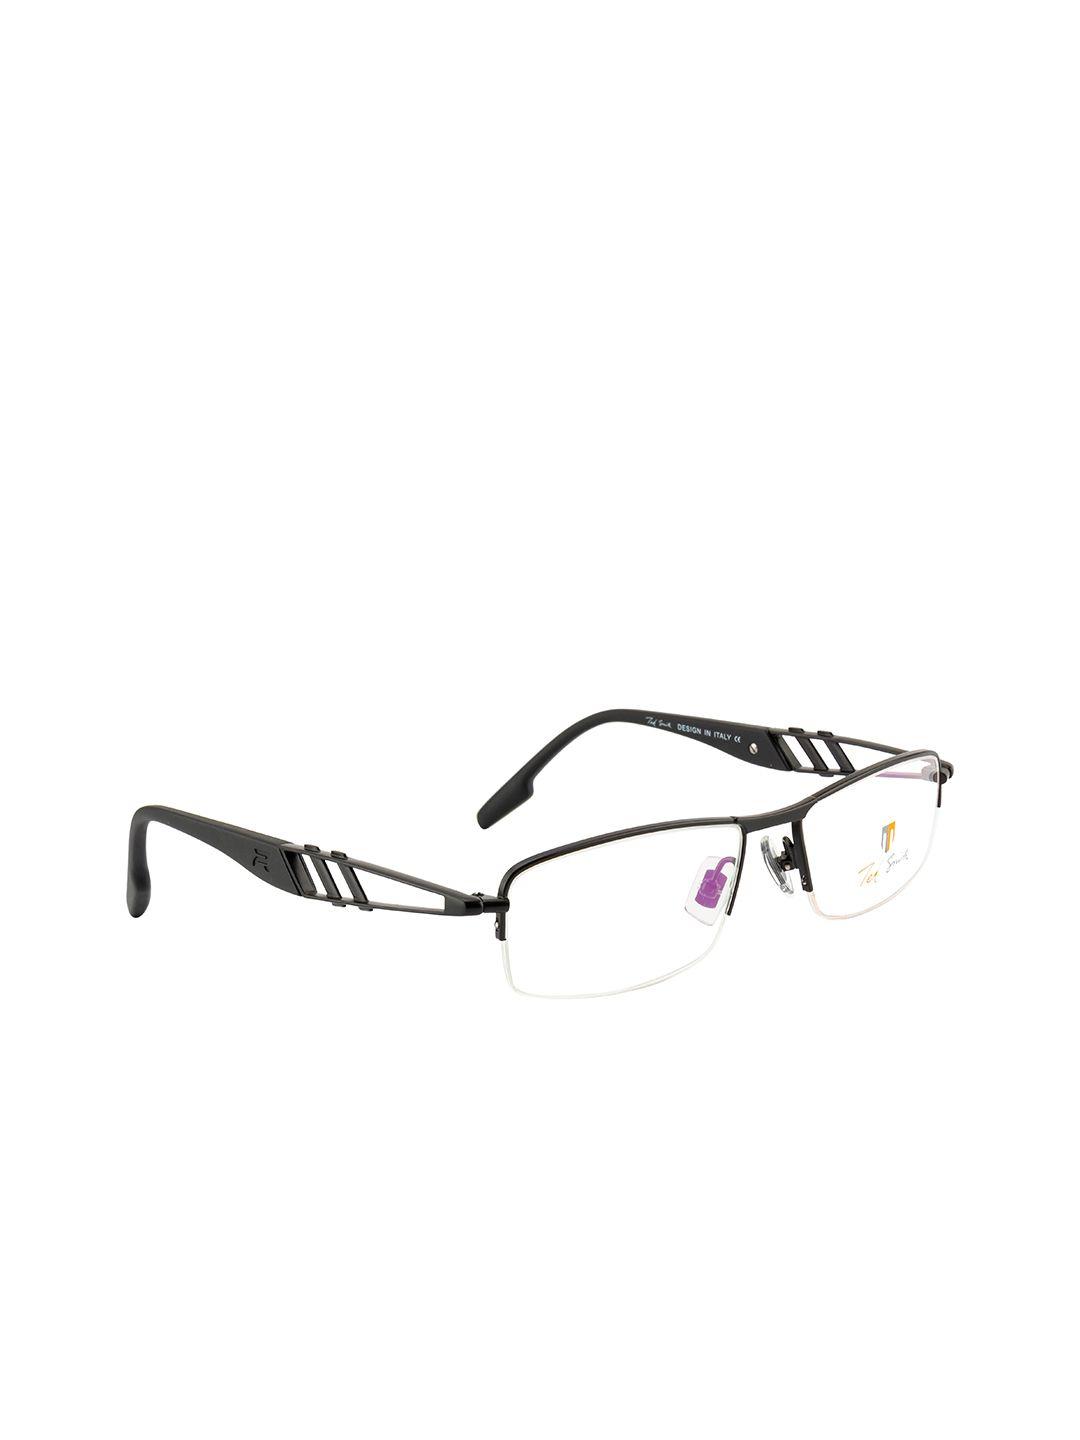 ted smith unisex black half rim rectangle frames eyeglasses